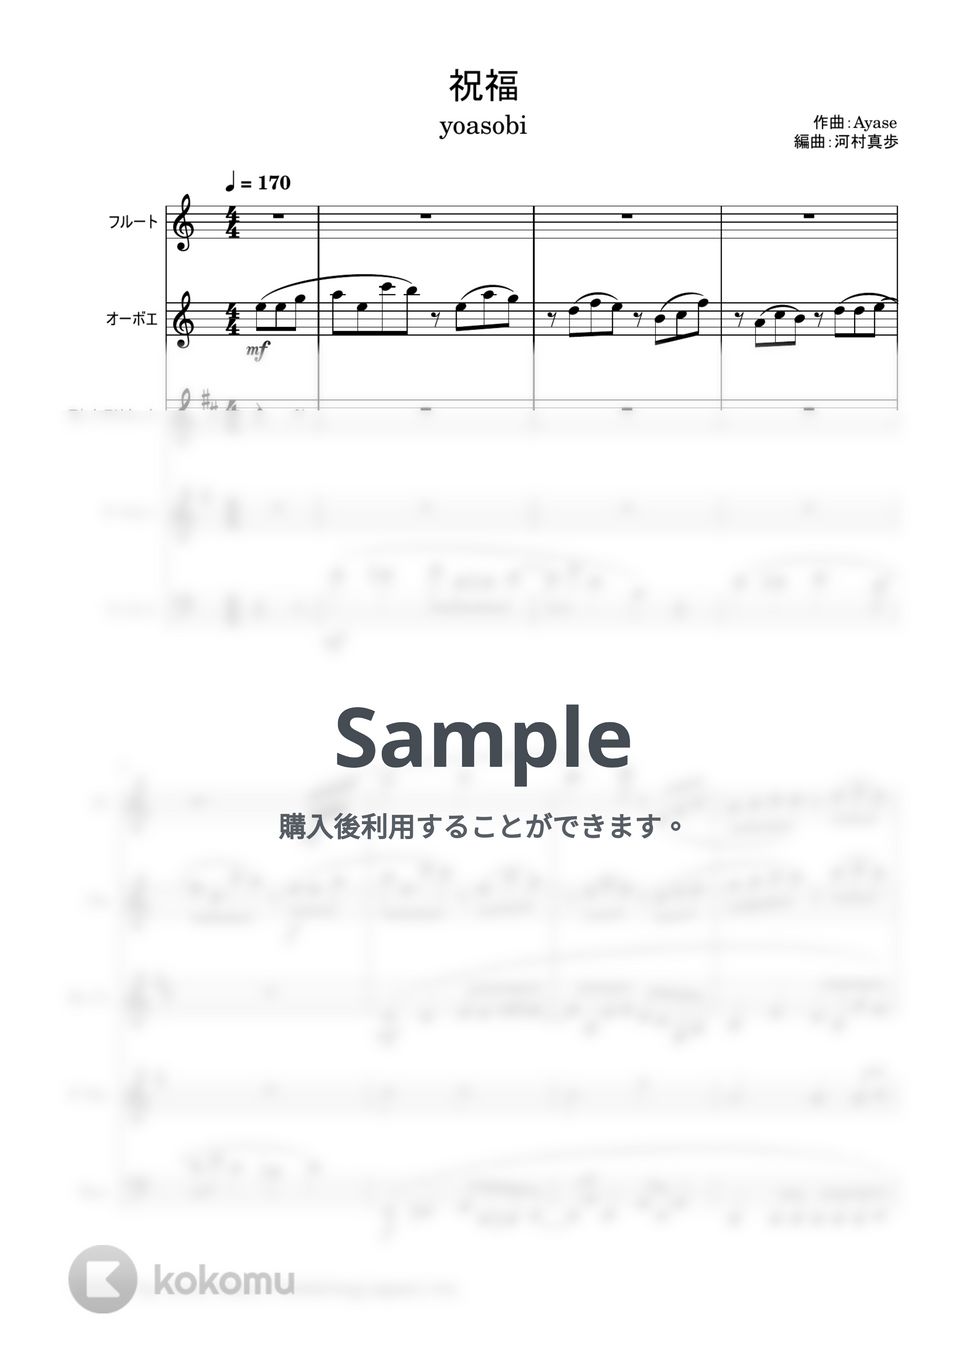 ayase - 祝福【木管五重奏】 (スコア+パート譜) by いたちの楽譜屋さん